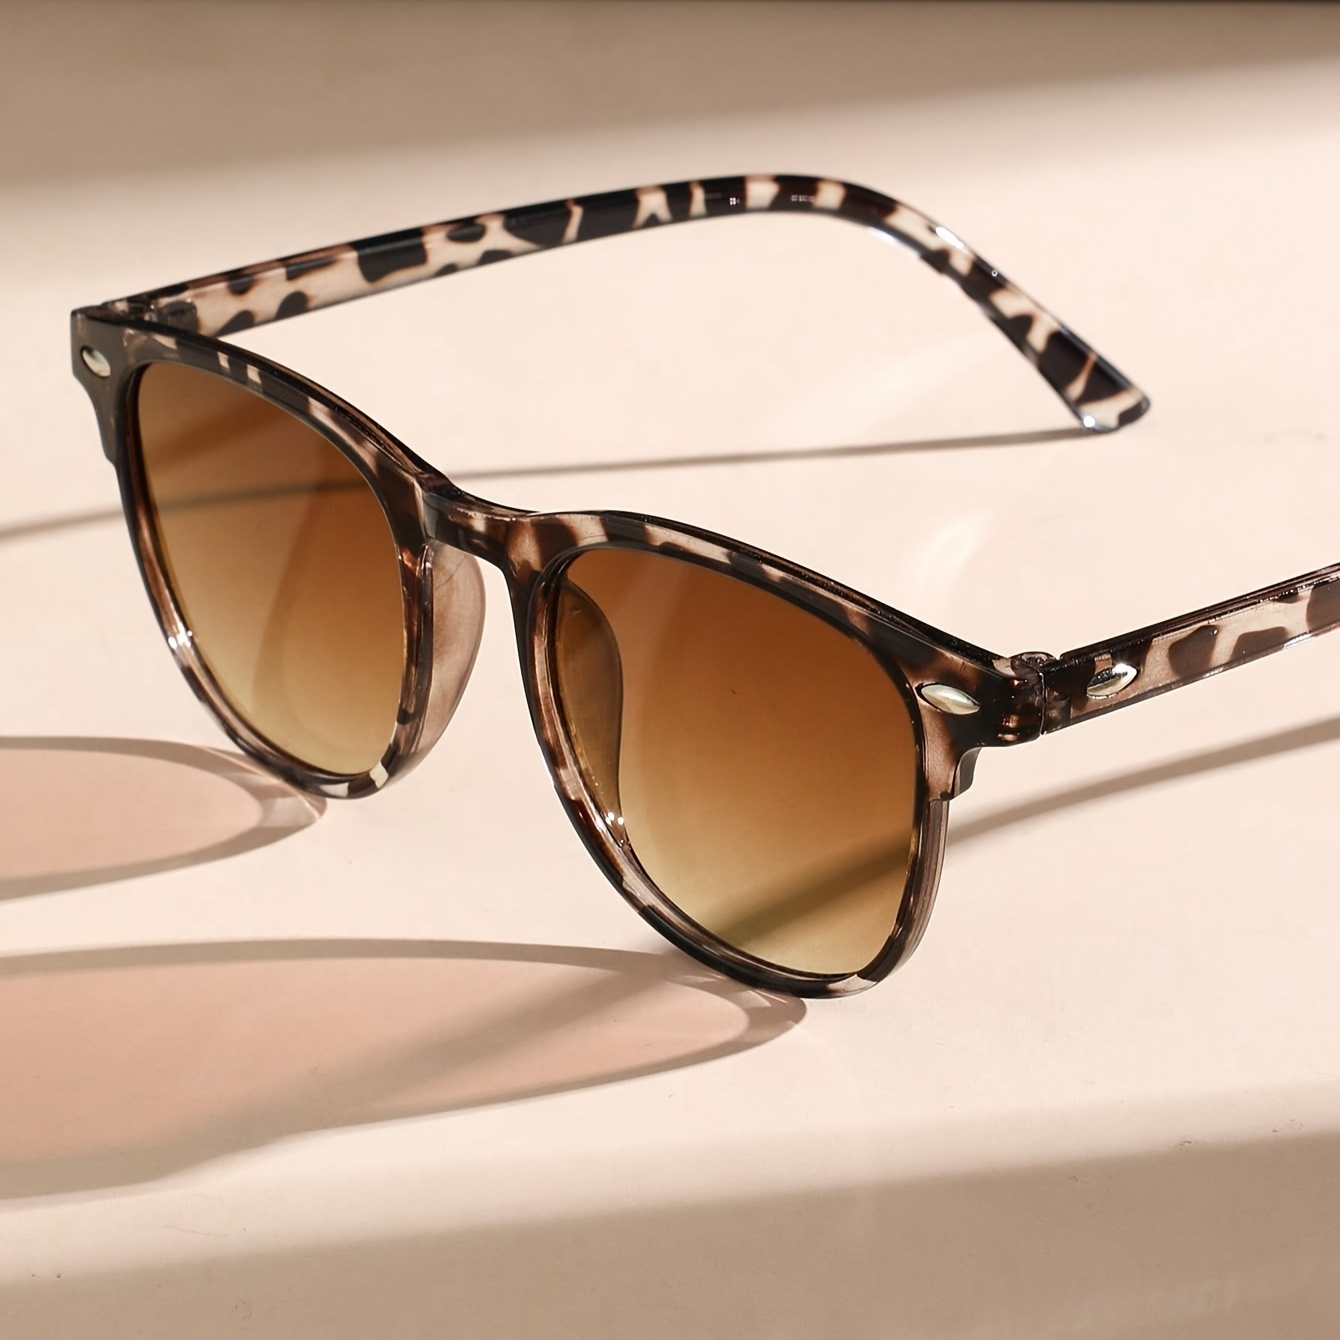 

Retro Square Fashion Glasses For Women Men Casual Gradient Tortoiseshell Sun Shades For Vacation Beach Travel